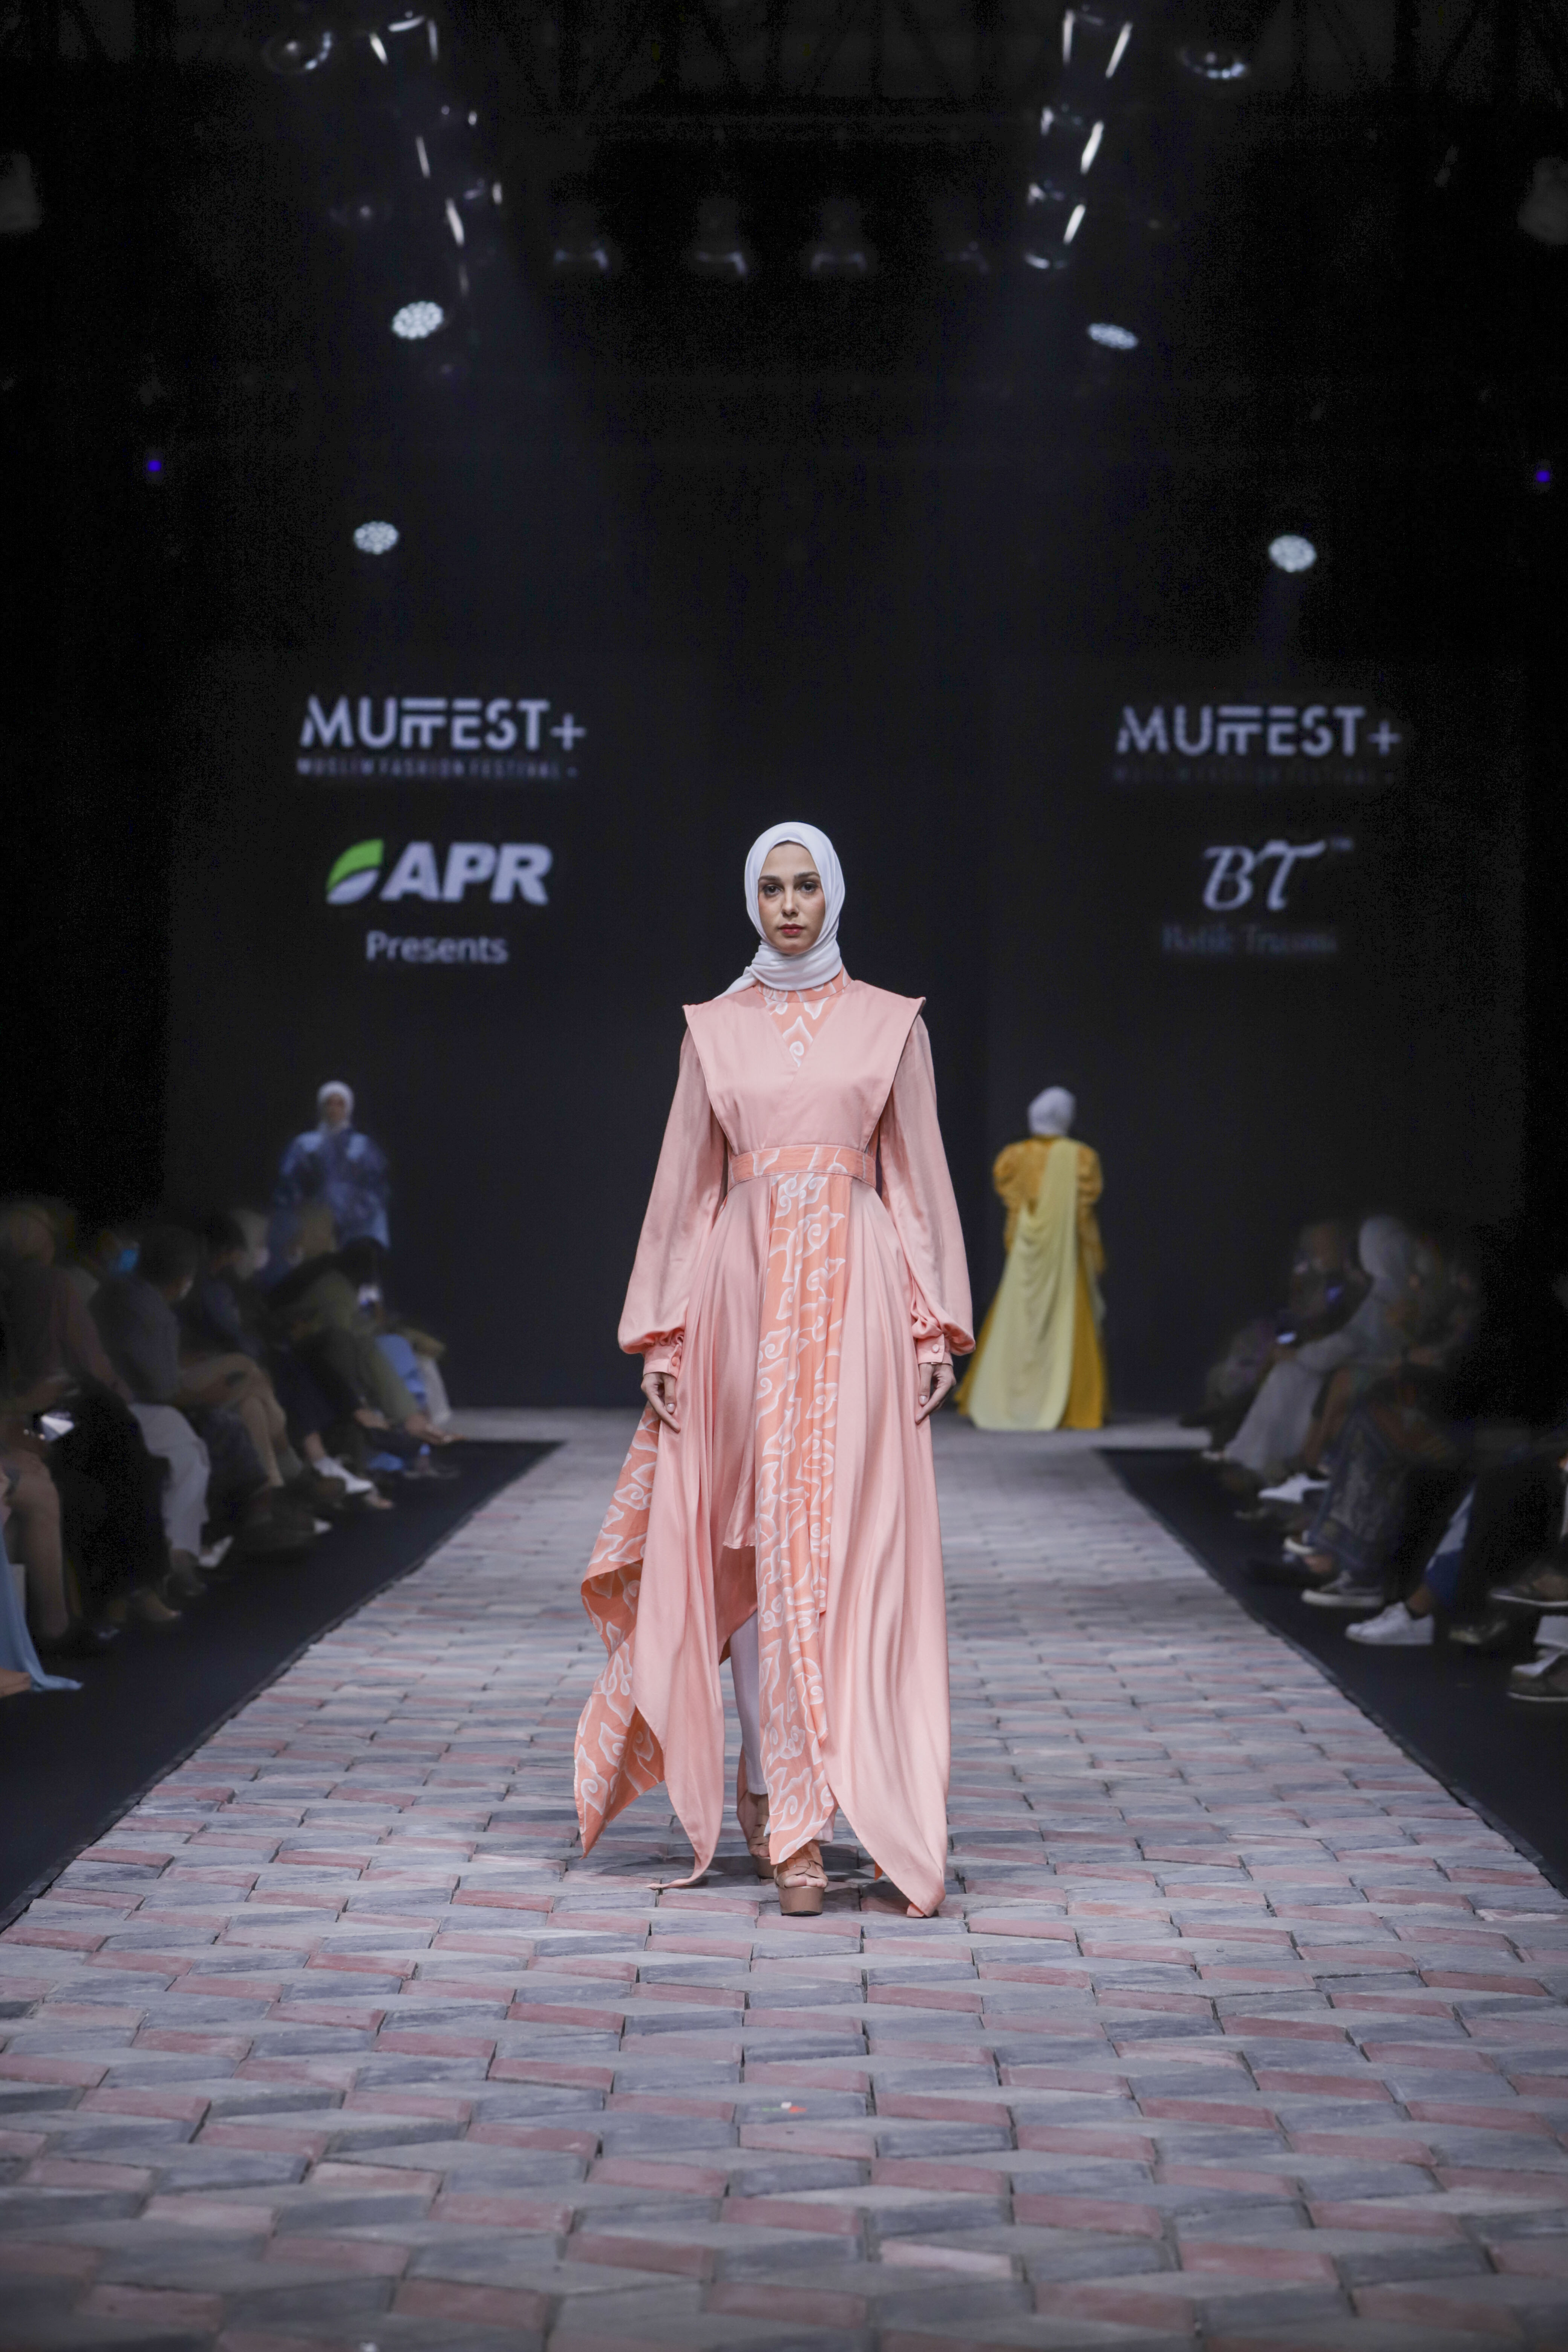 Model pakaian terusan dari BT Batik Trusmi dalam Sustainable Modest Fashion, Muslim Fashion Festival (MUFFEST+) 2022, Kamis (21/04/2022). (Sumber: MUFFEST+ 2022)